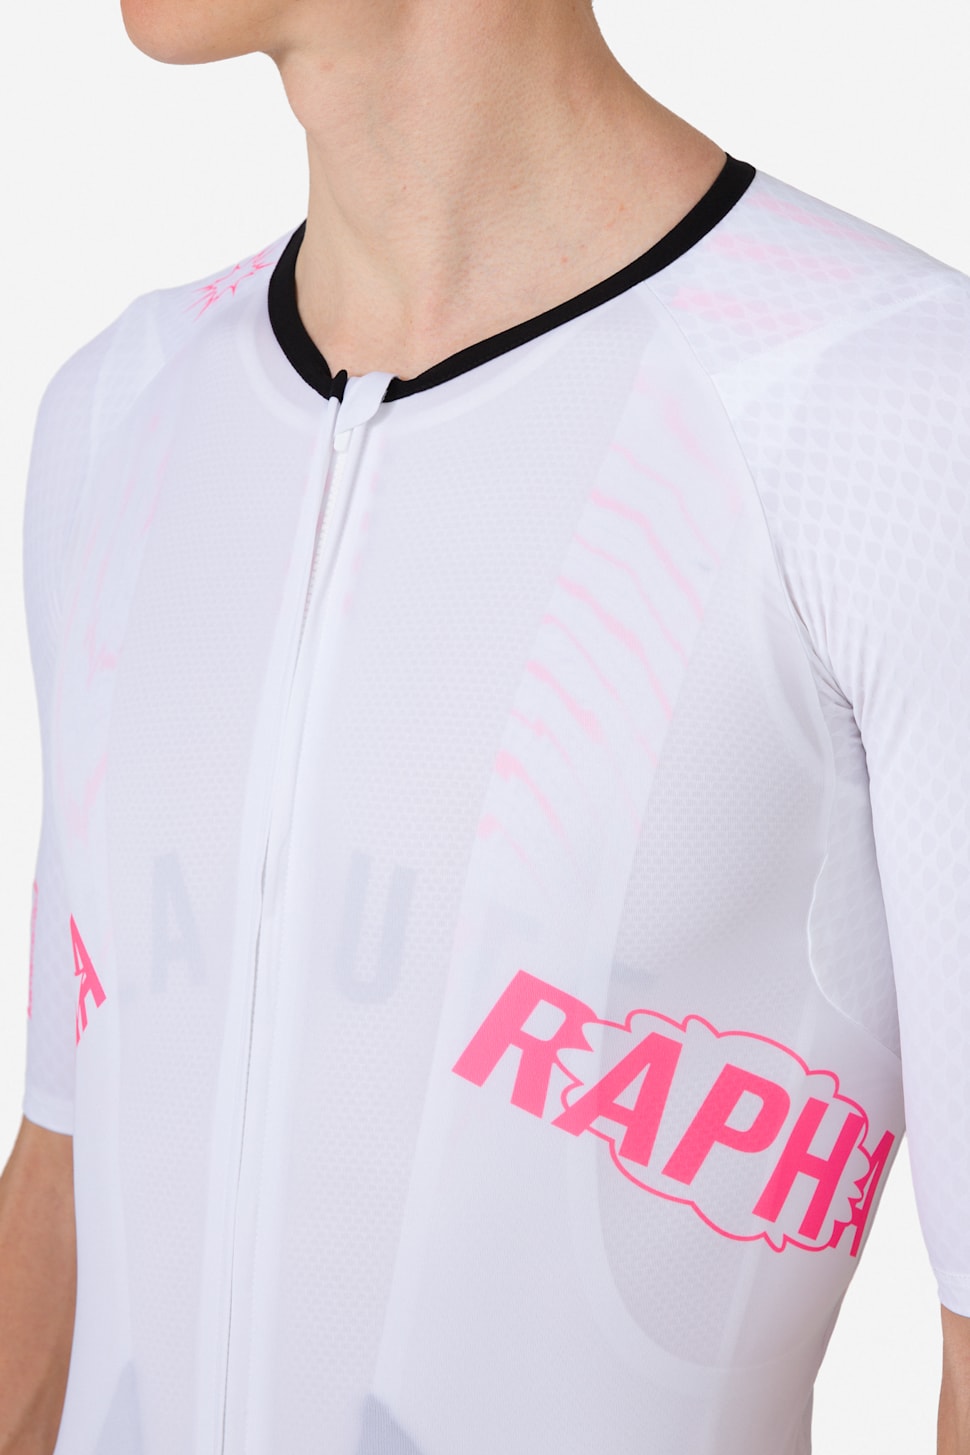 EF Men's Pro Team Aero Jersey | Rapha